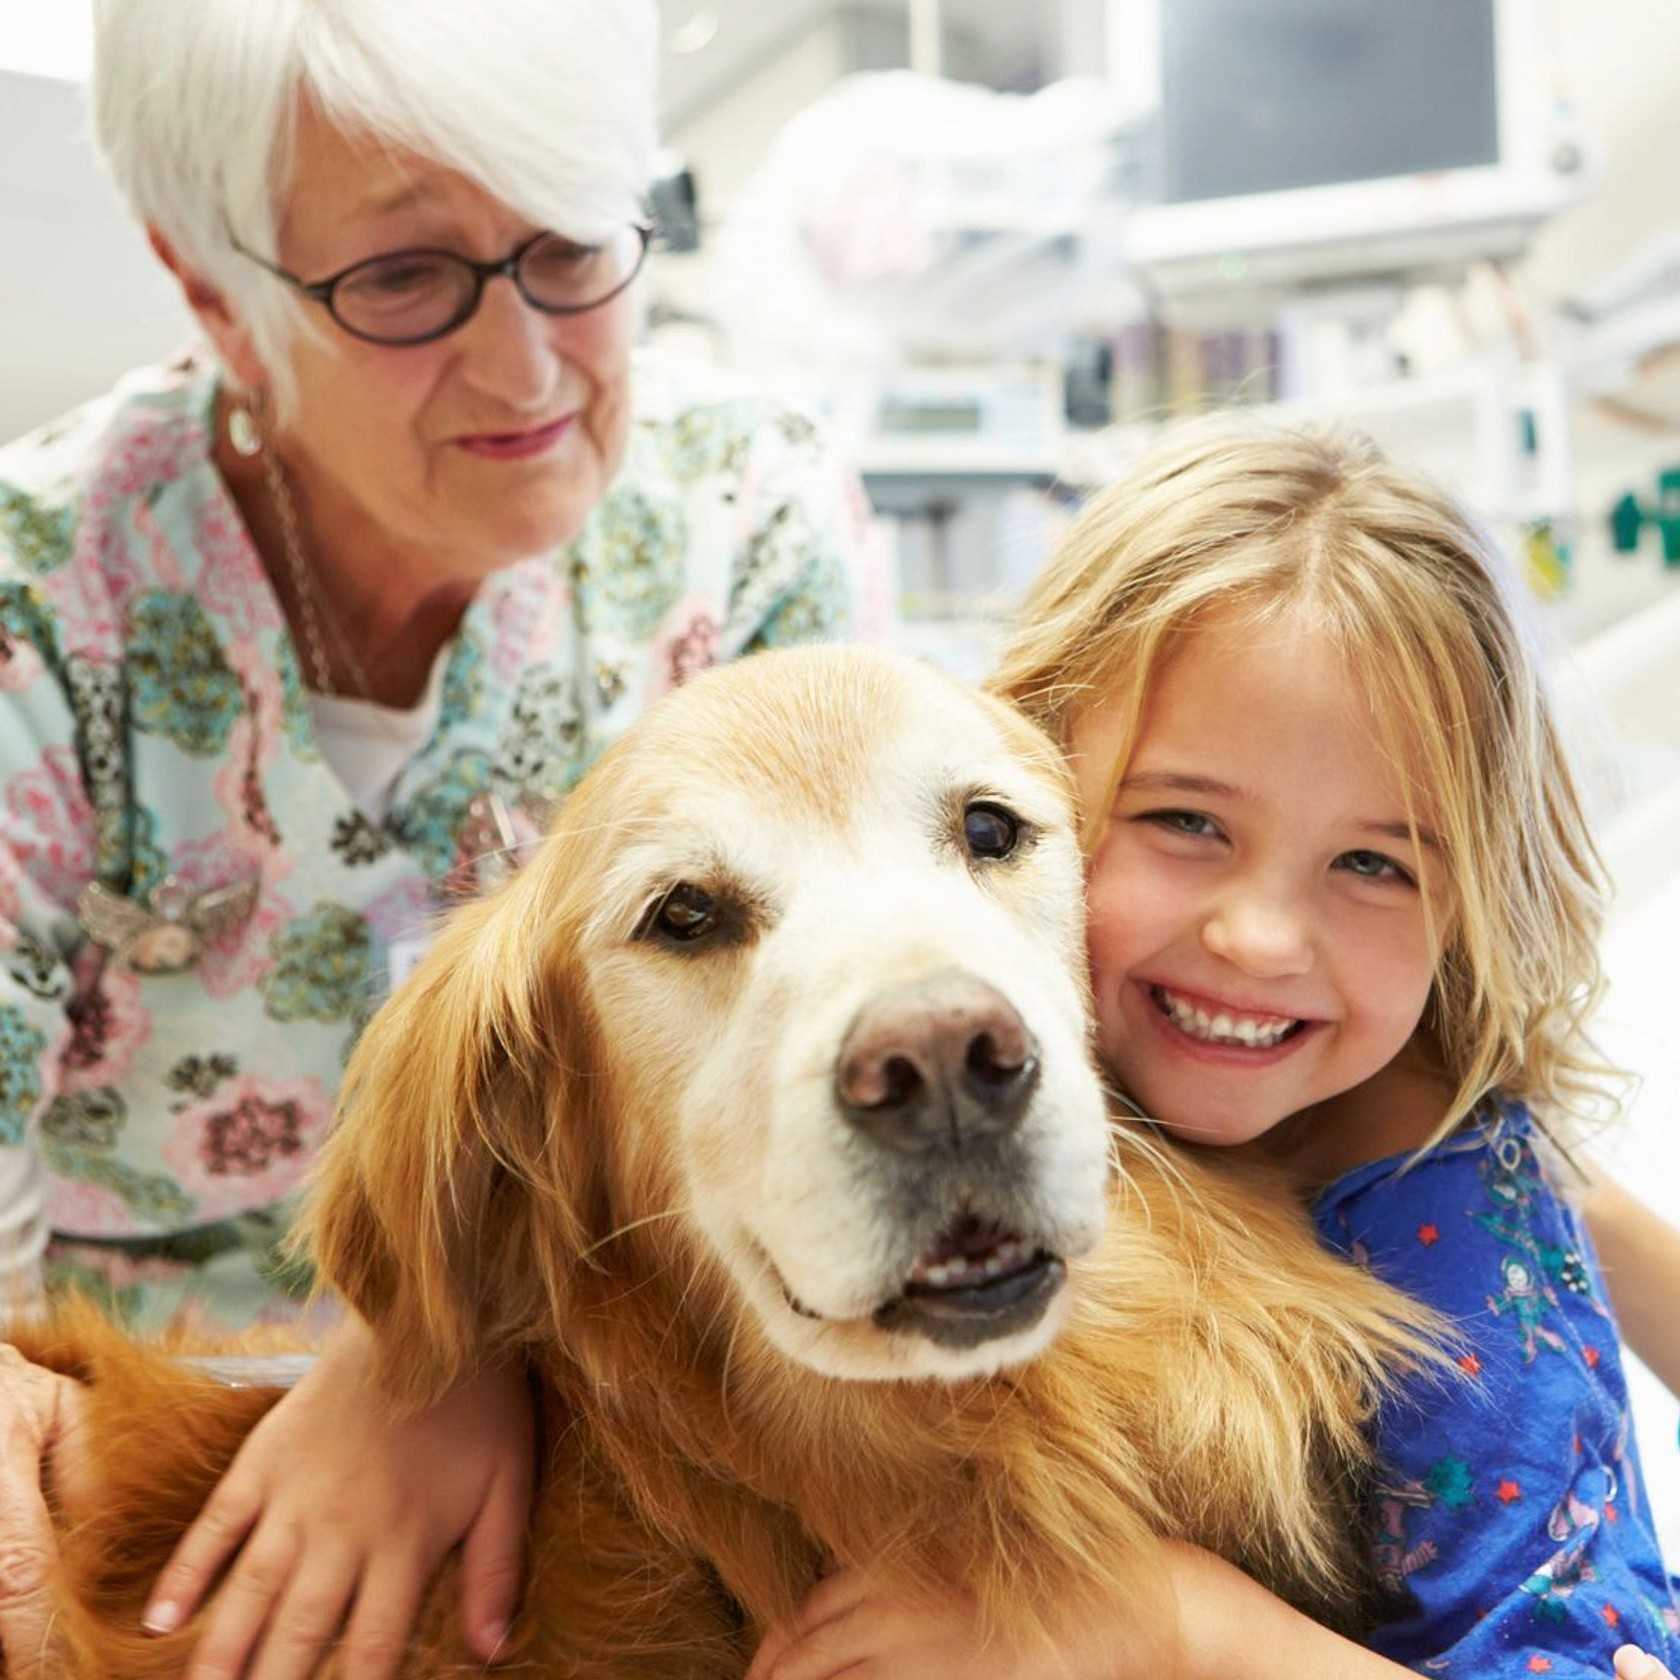 Medweb - анималотерапия: общение с животными как лекарство